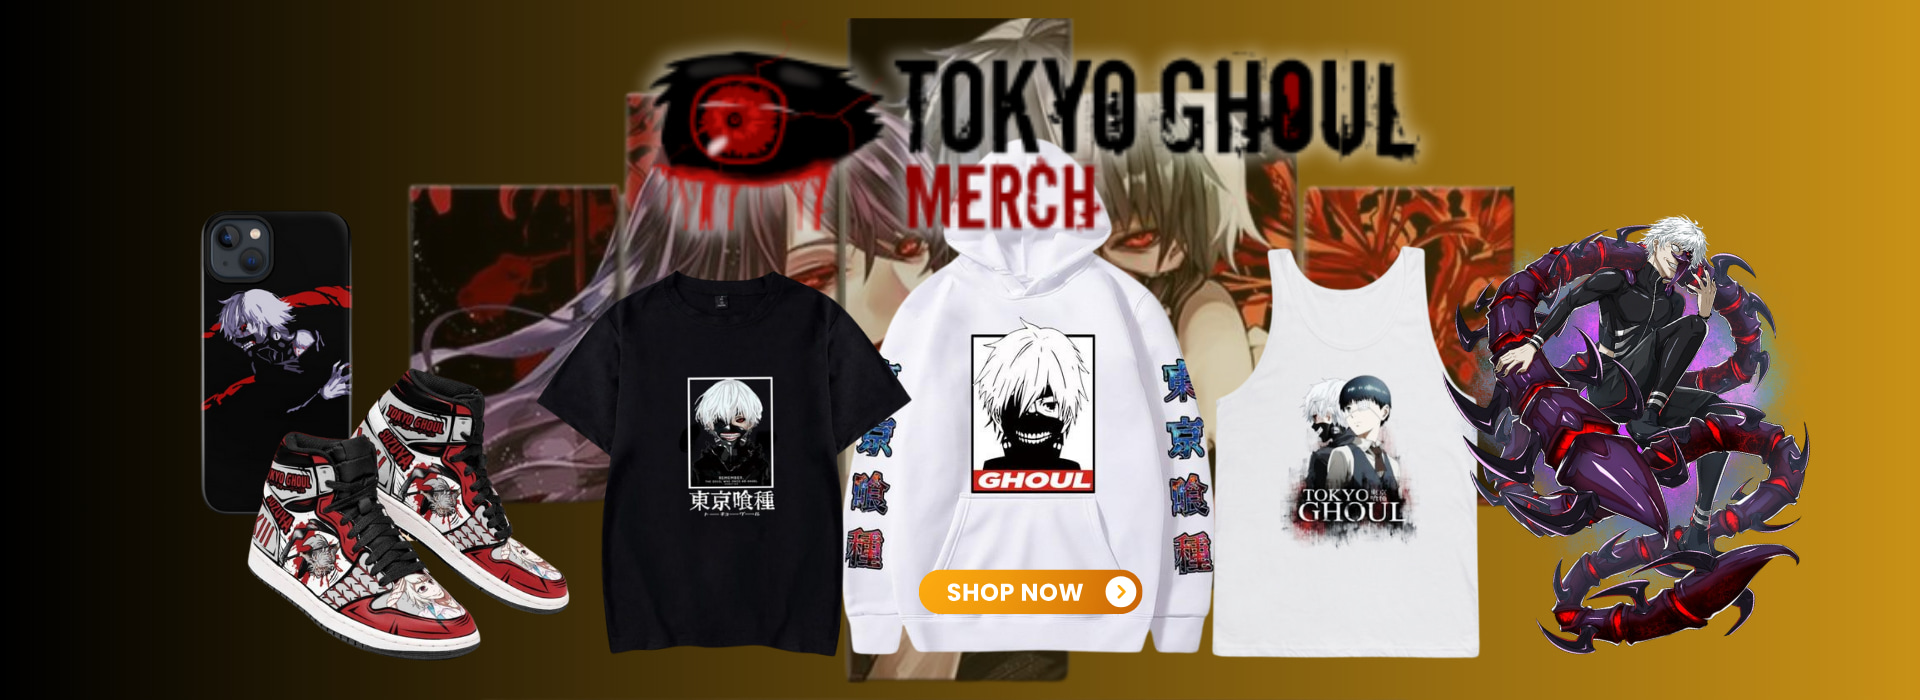 Tokyo Ghoul Merch Store Banner1